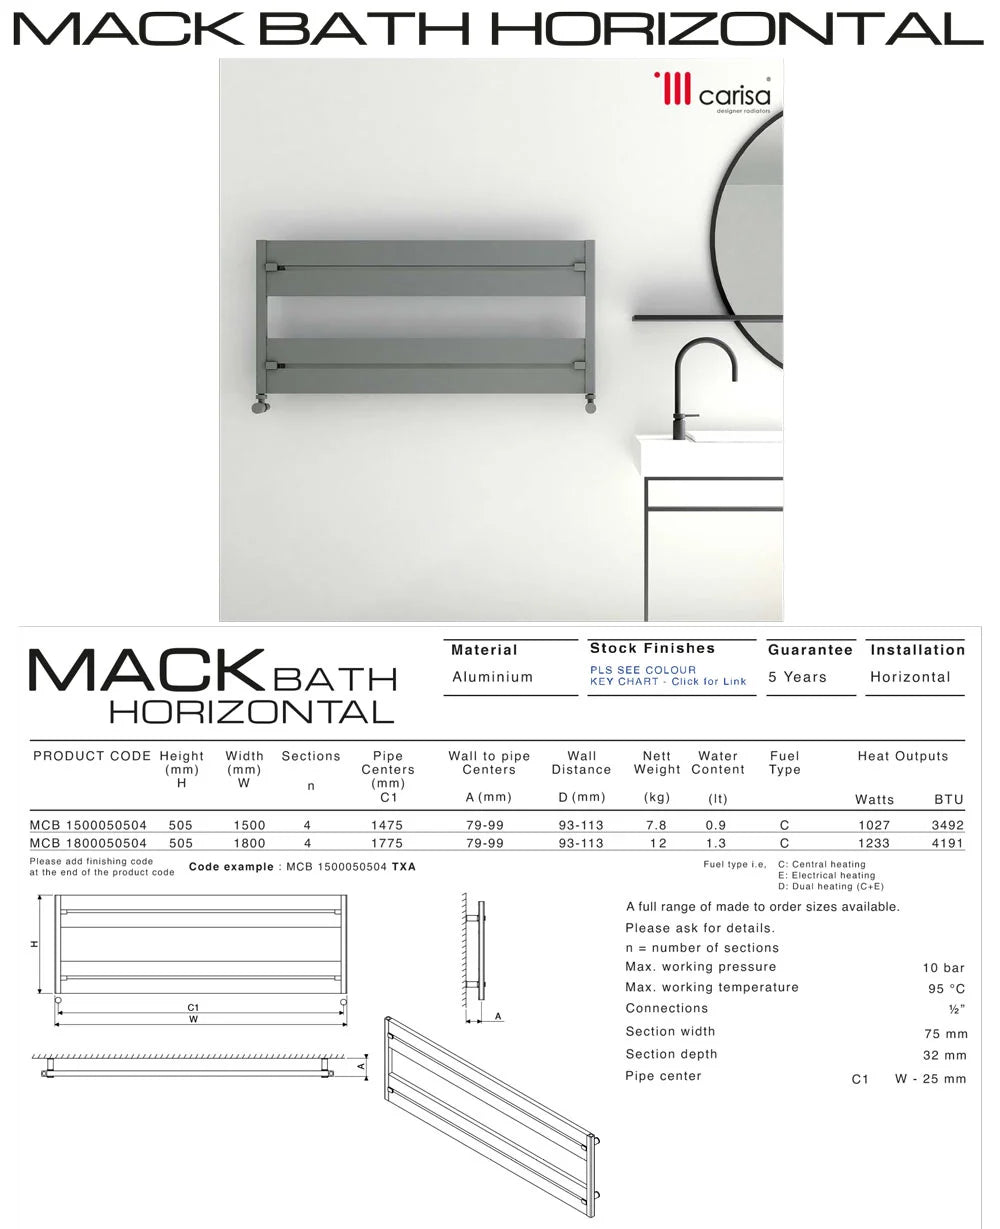 carisa mack bath horizontal matt black specification data sheet with illustration line drawing